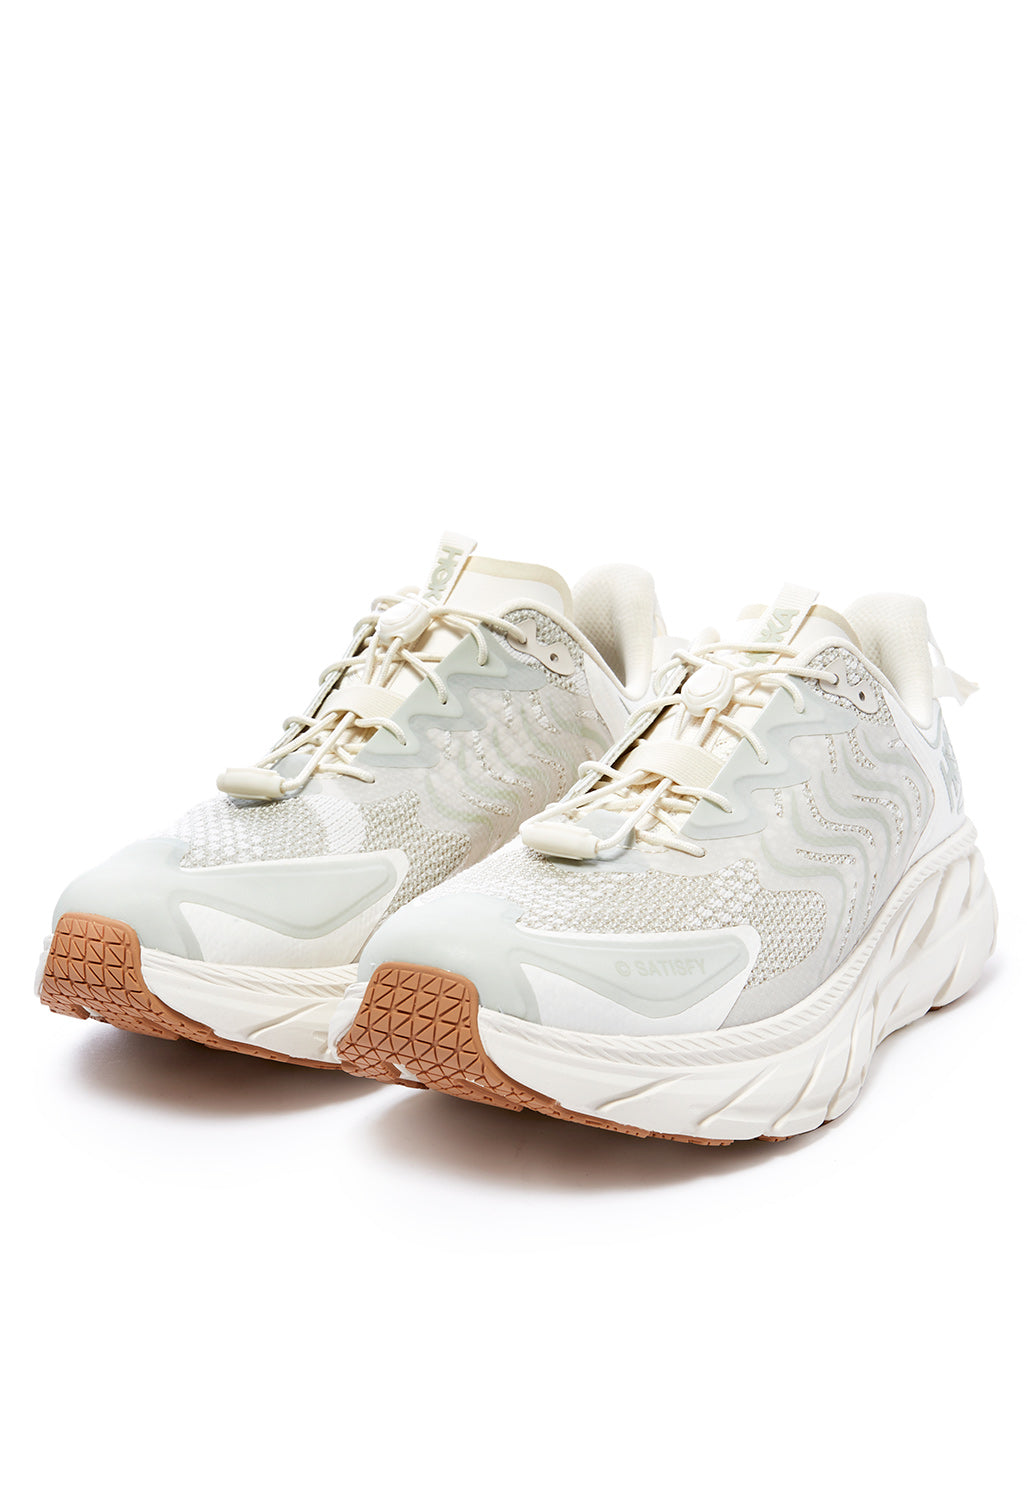 Hoka Clifton LS Satisfy Running Shoes - Celadon Tint / Whisper